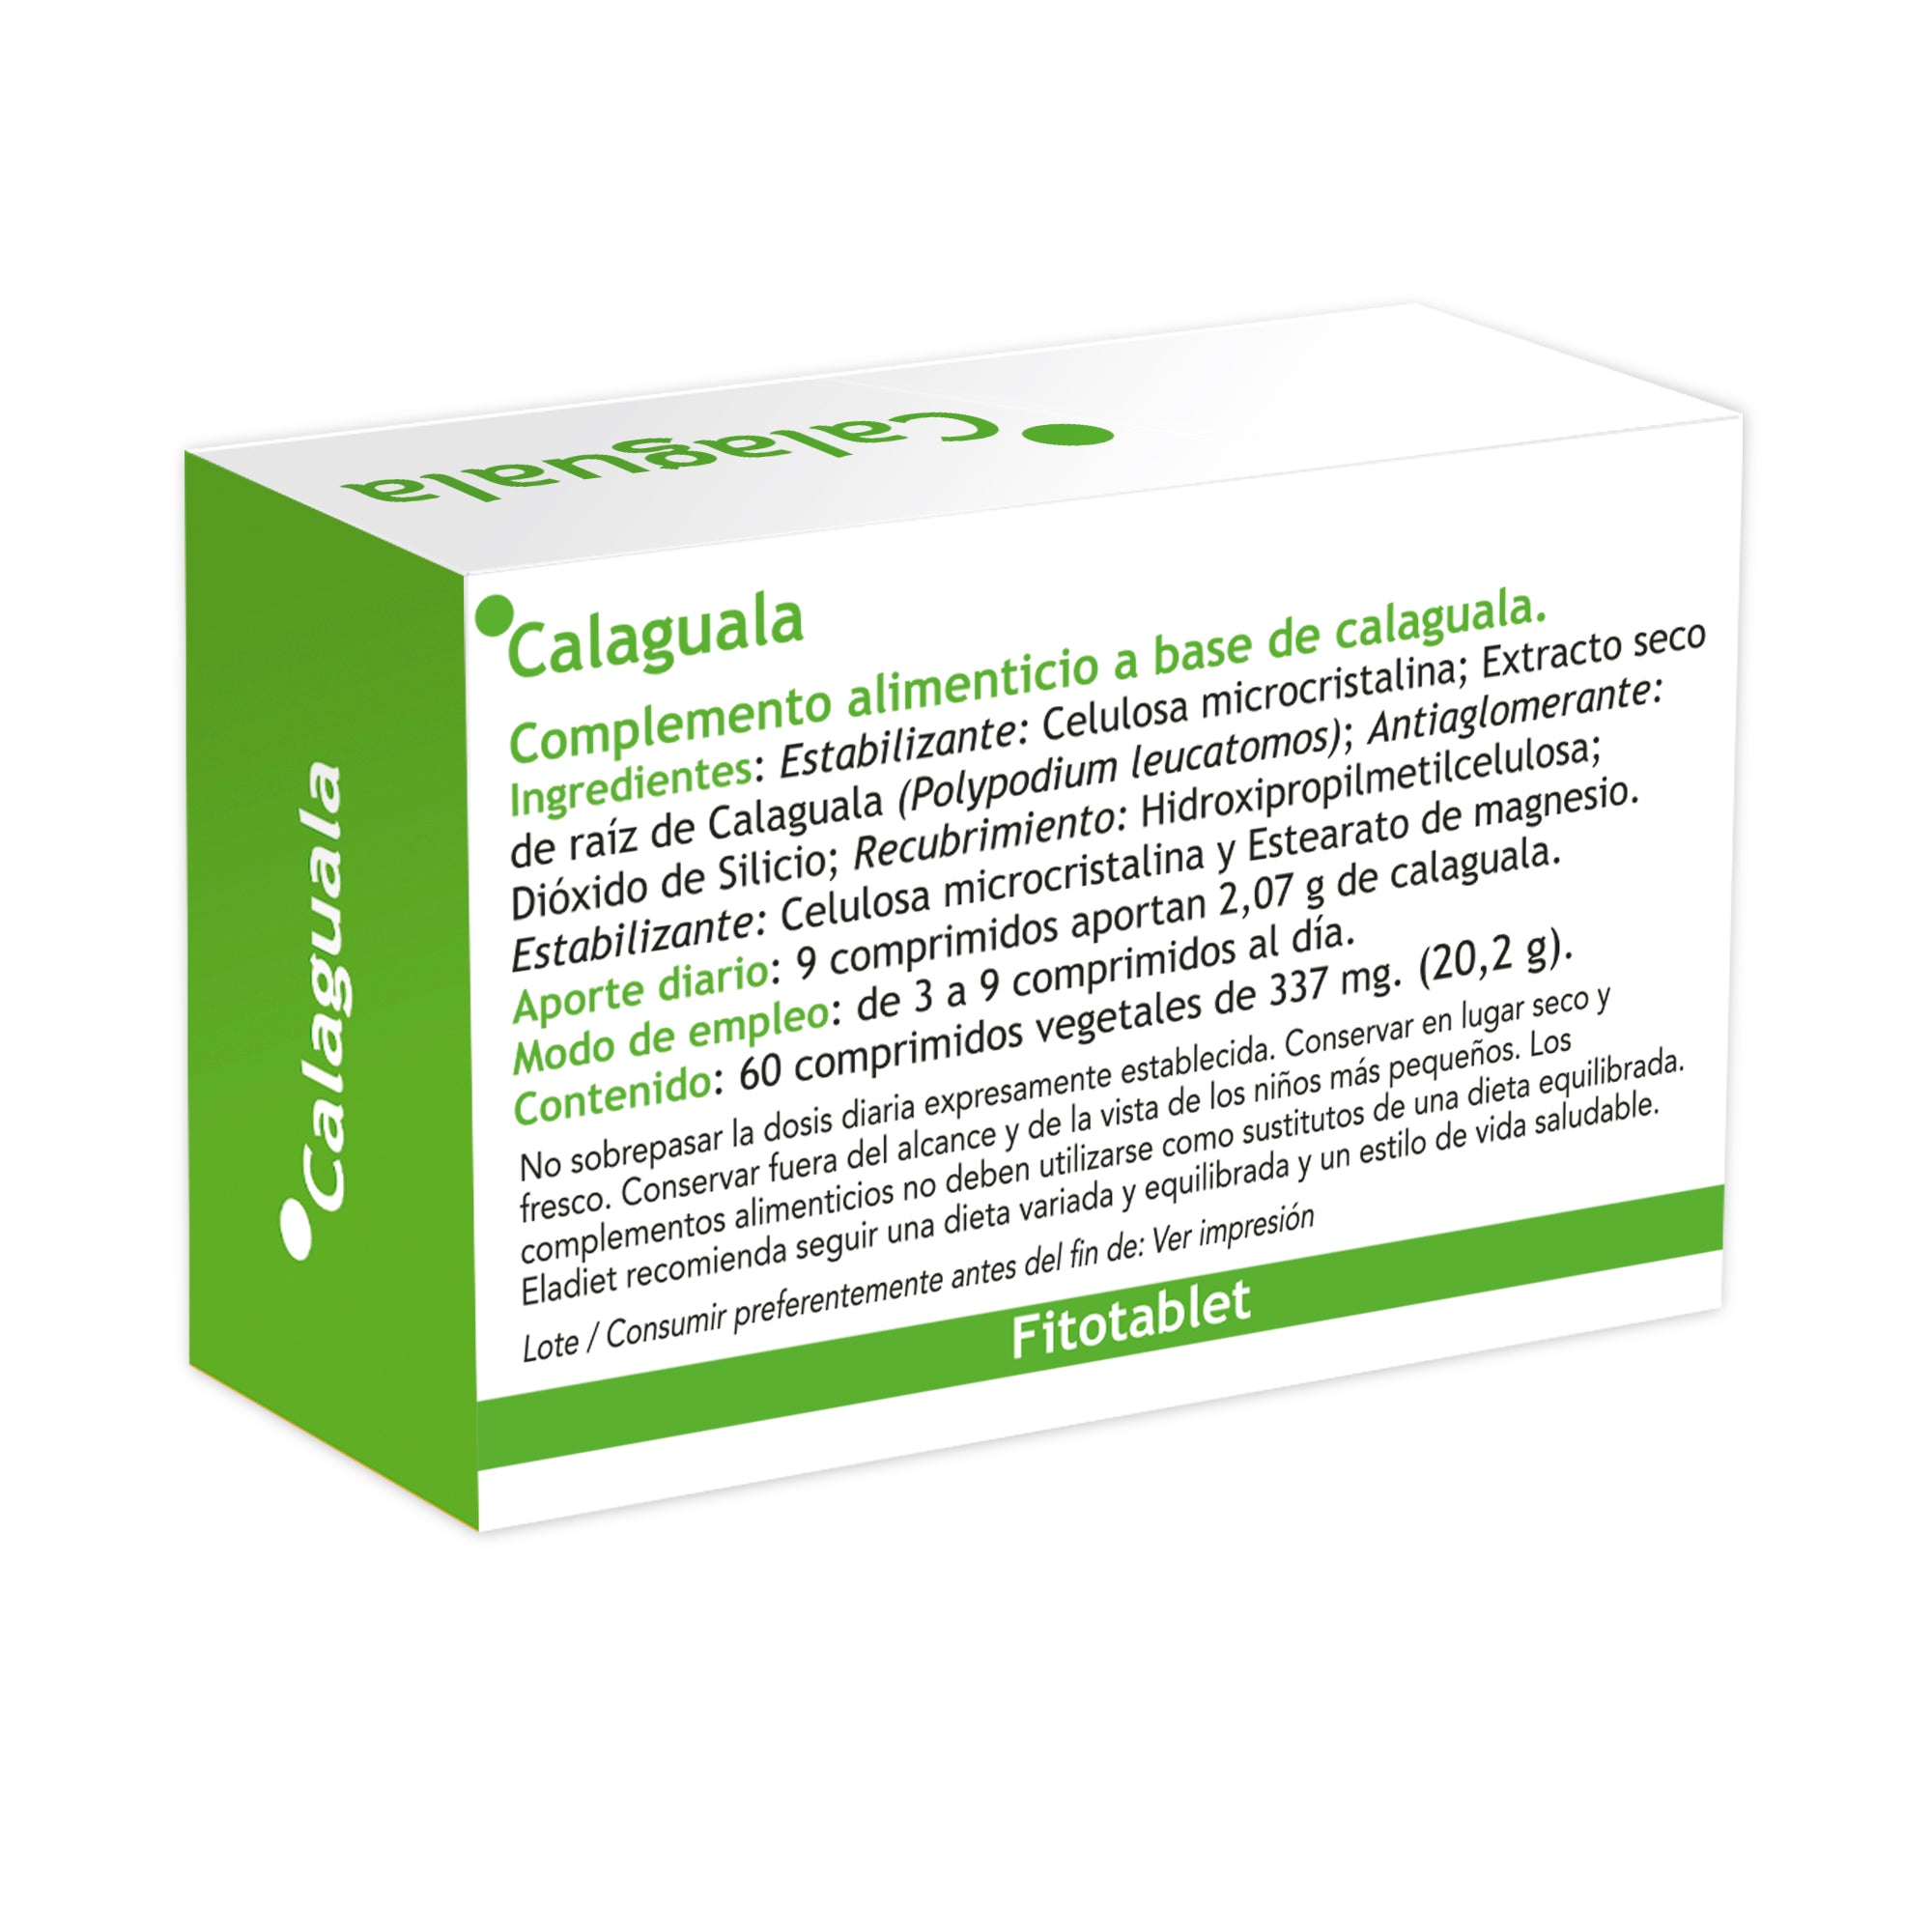 Eladiet - Fitotablet Calaguala 330Mg 60 Comprimidos - Biopharmacia, Parafarmacia online